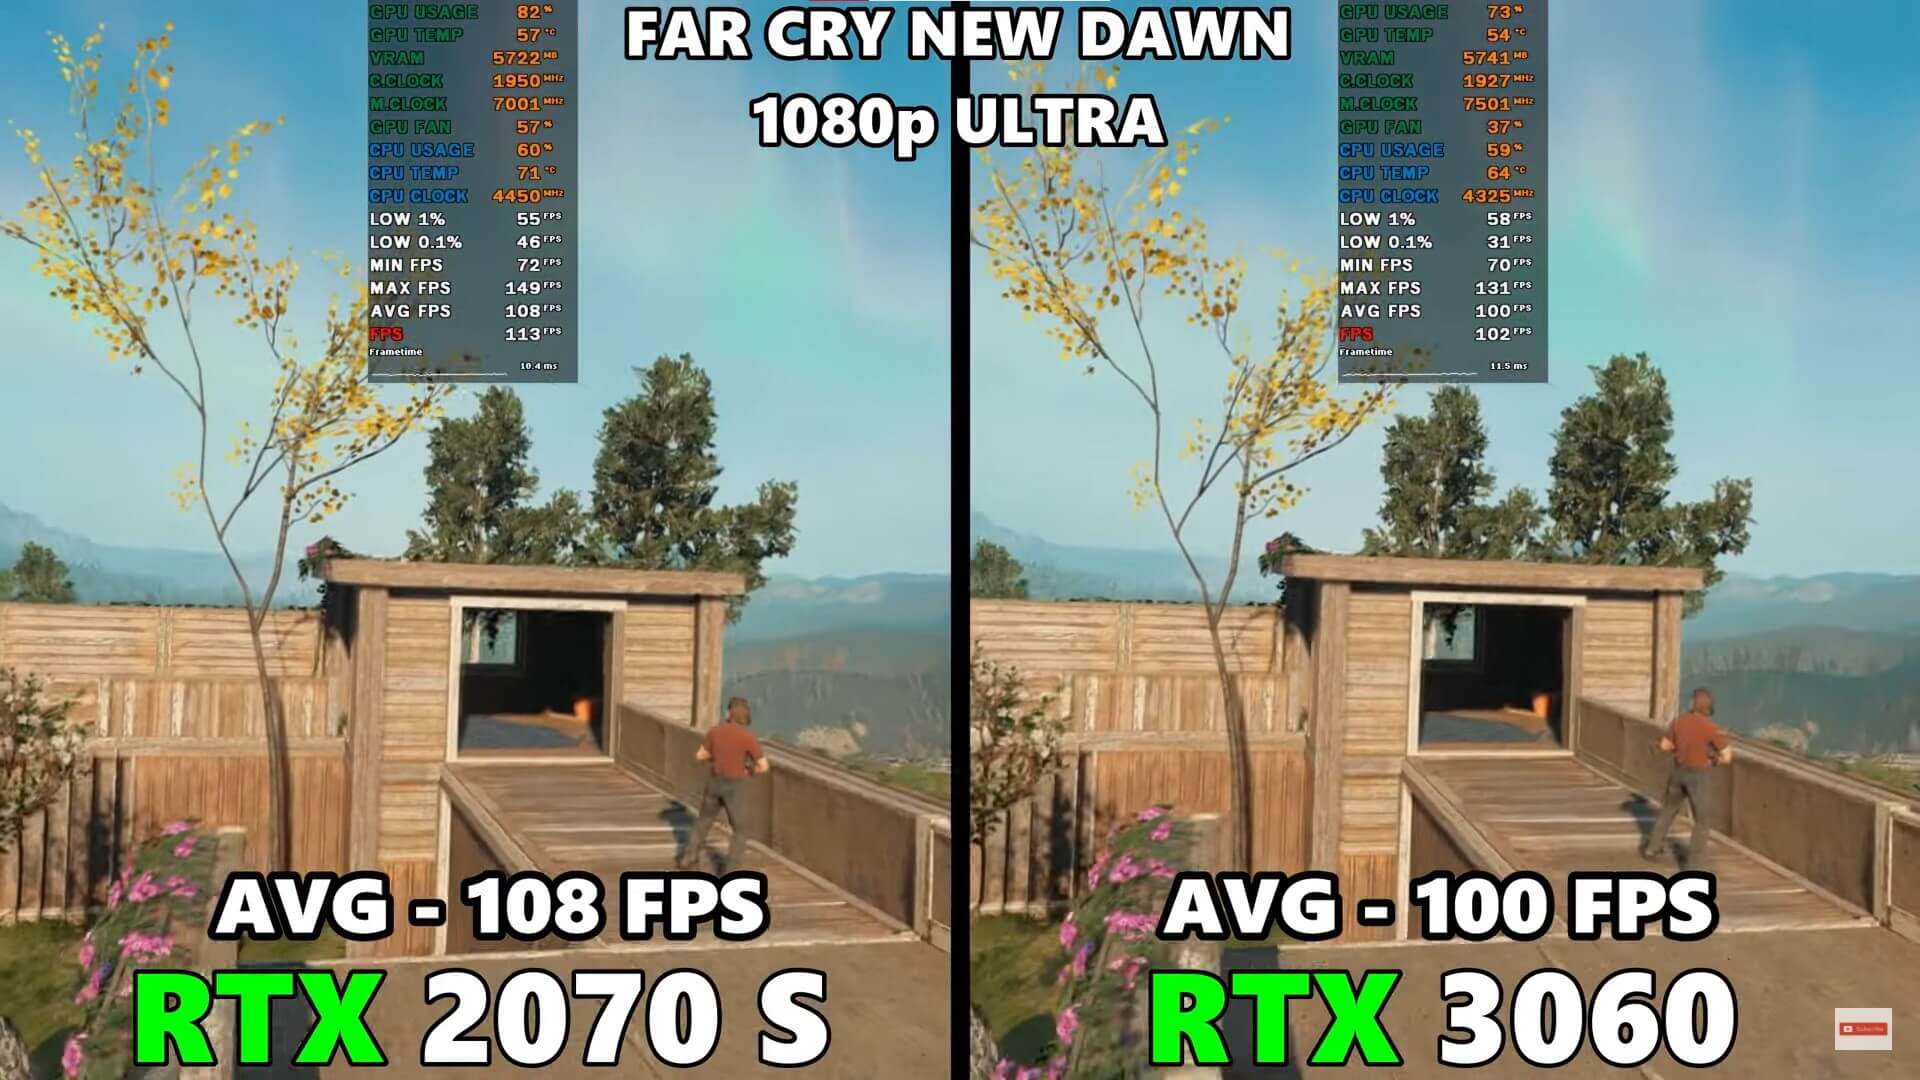 Far Cry New Dawn performance for RTX 2070 Super Vs. 3060.